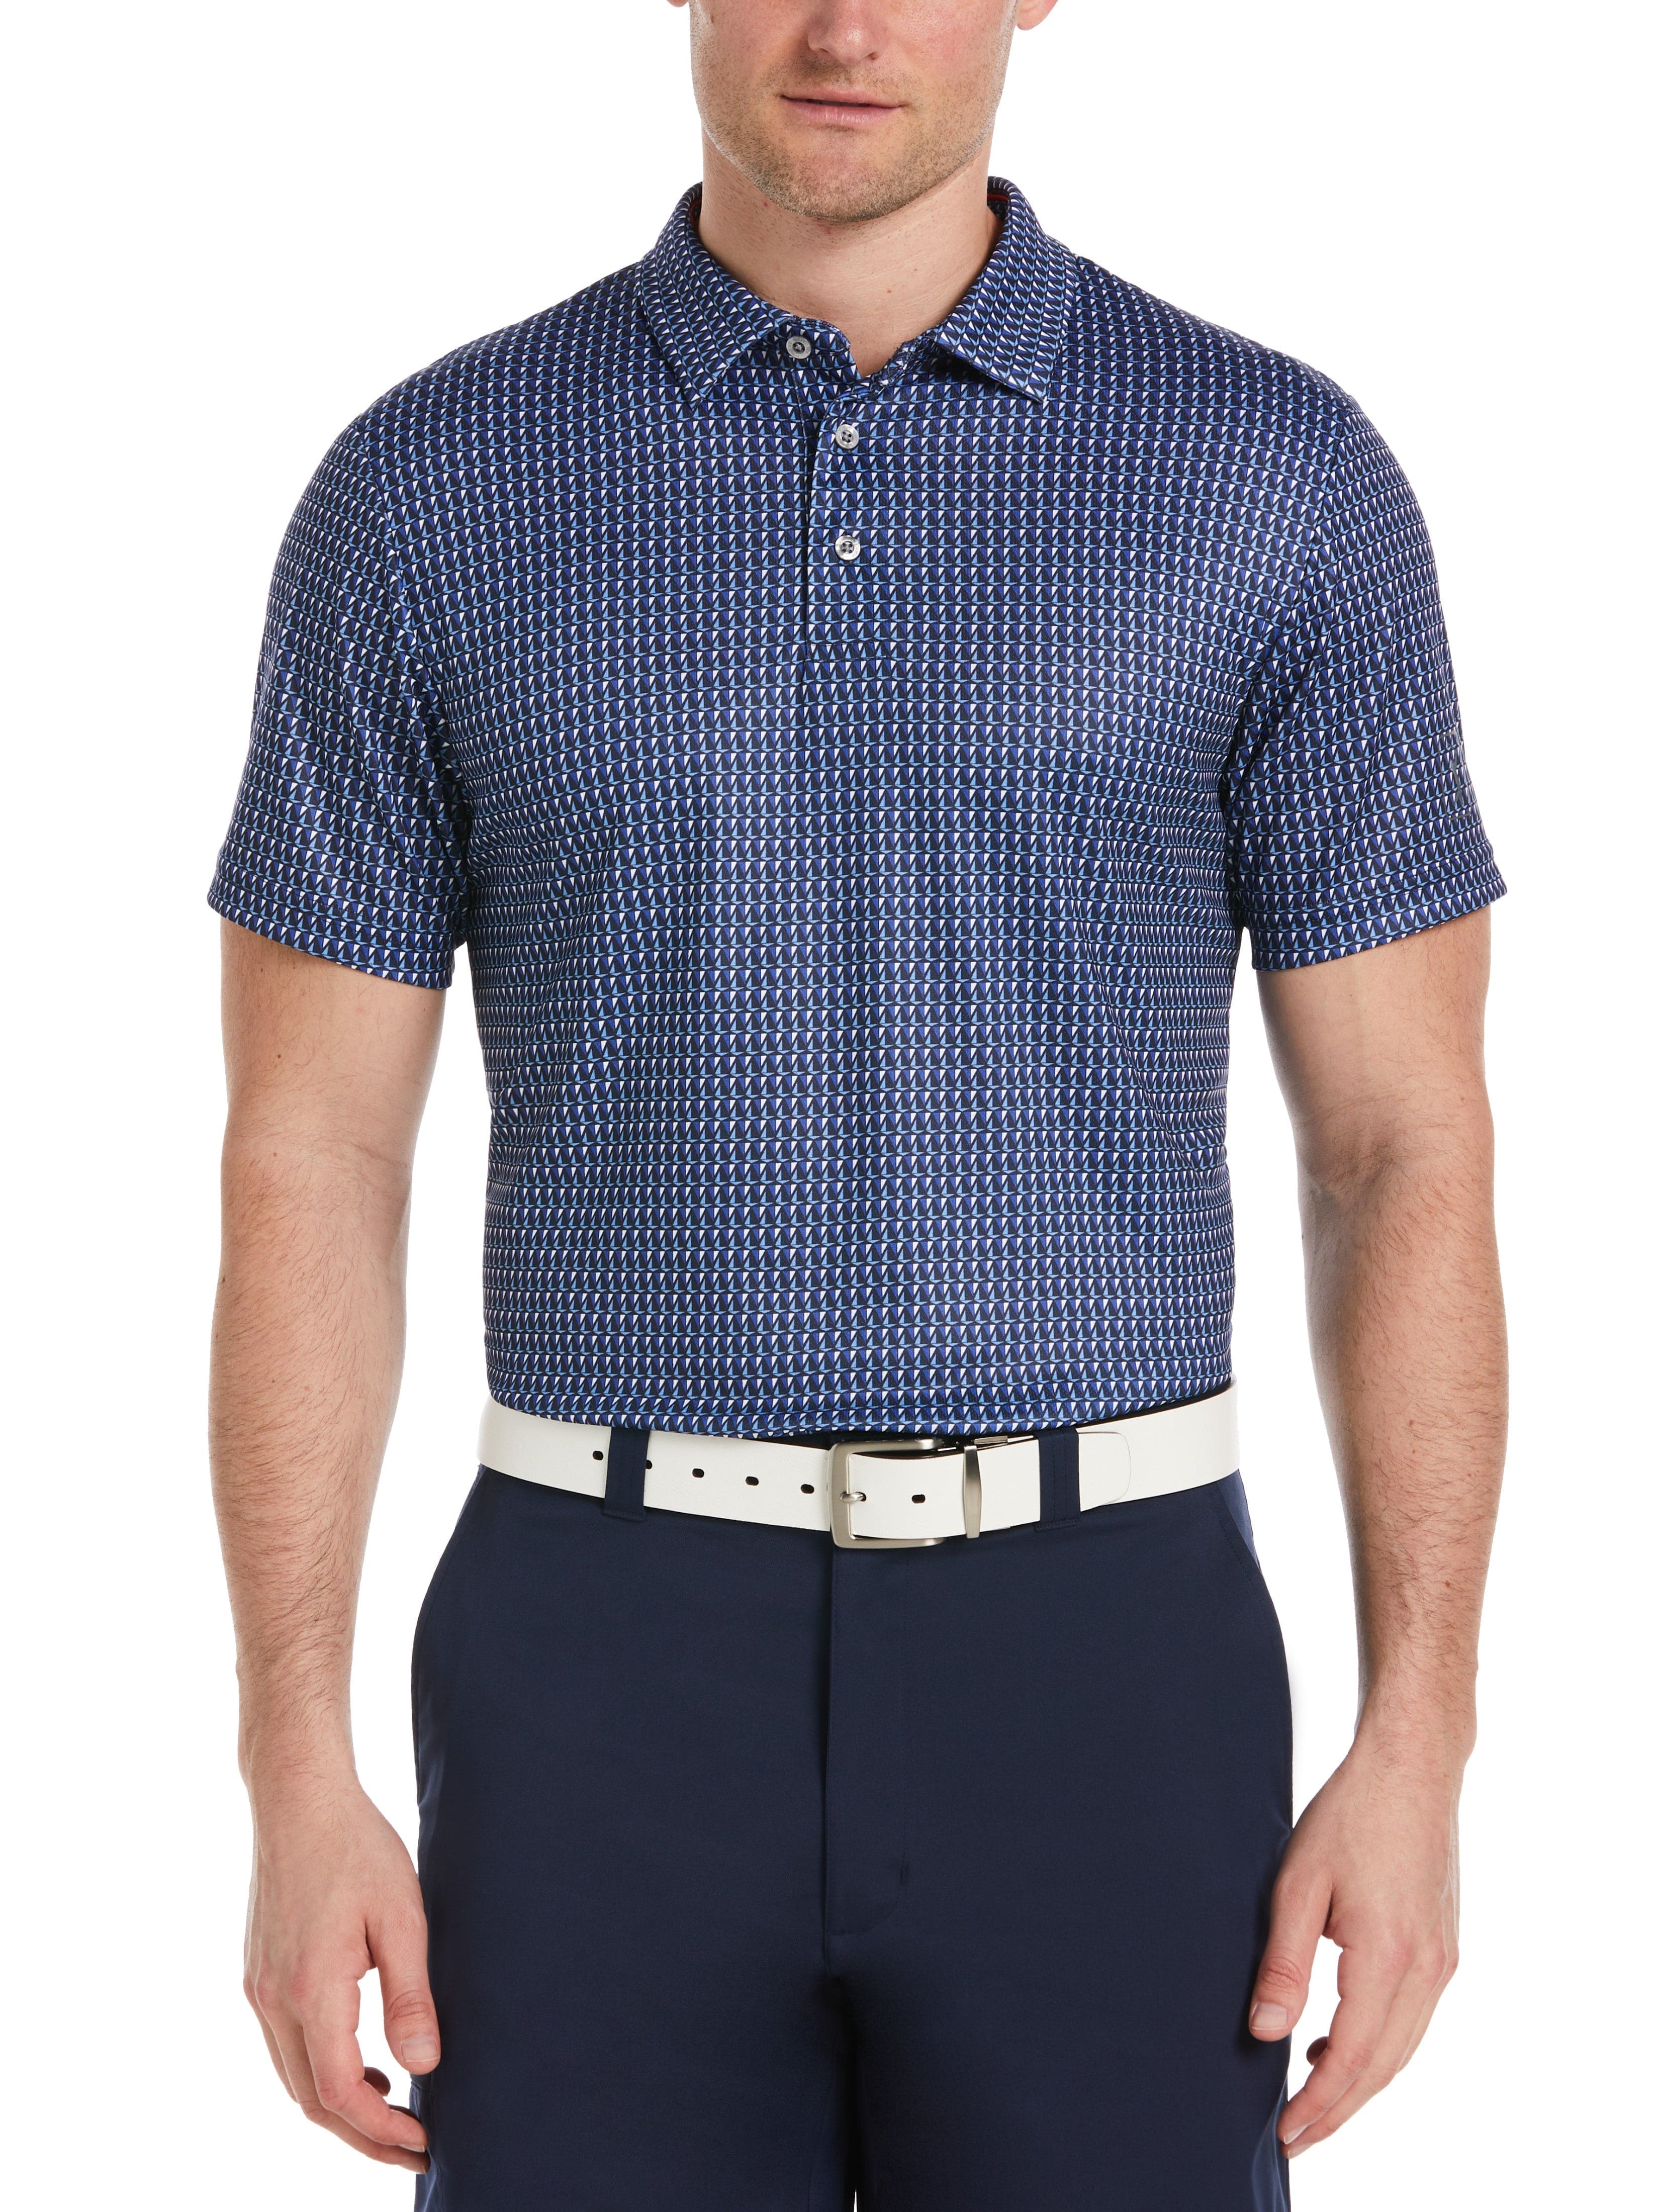 PGA TOUR Apparel Mens Americana Boats Print Golf Polo Shirt, Size Medium, Navy Blue, 100% Polyester | Golf Apparel Shop